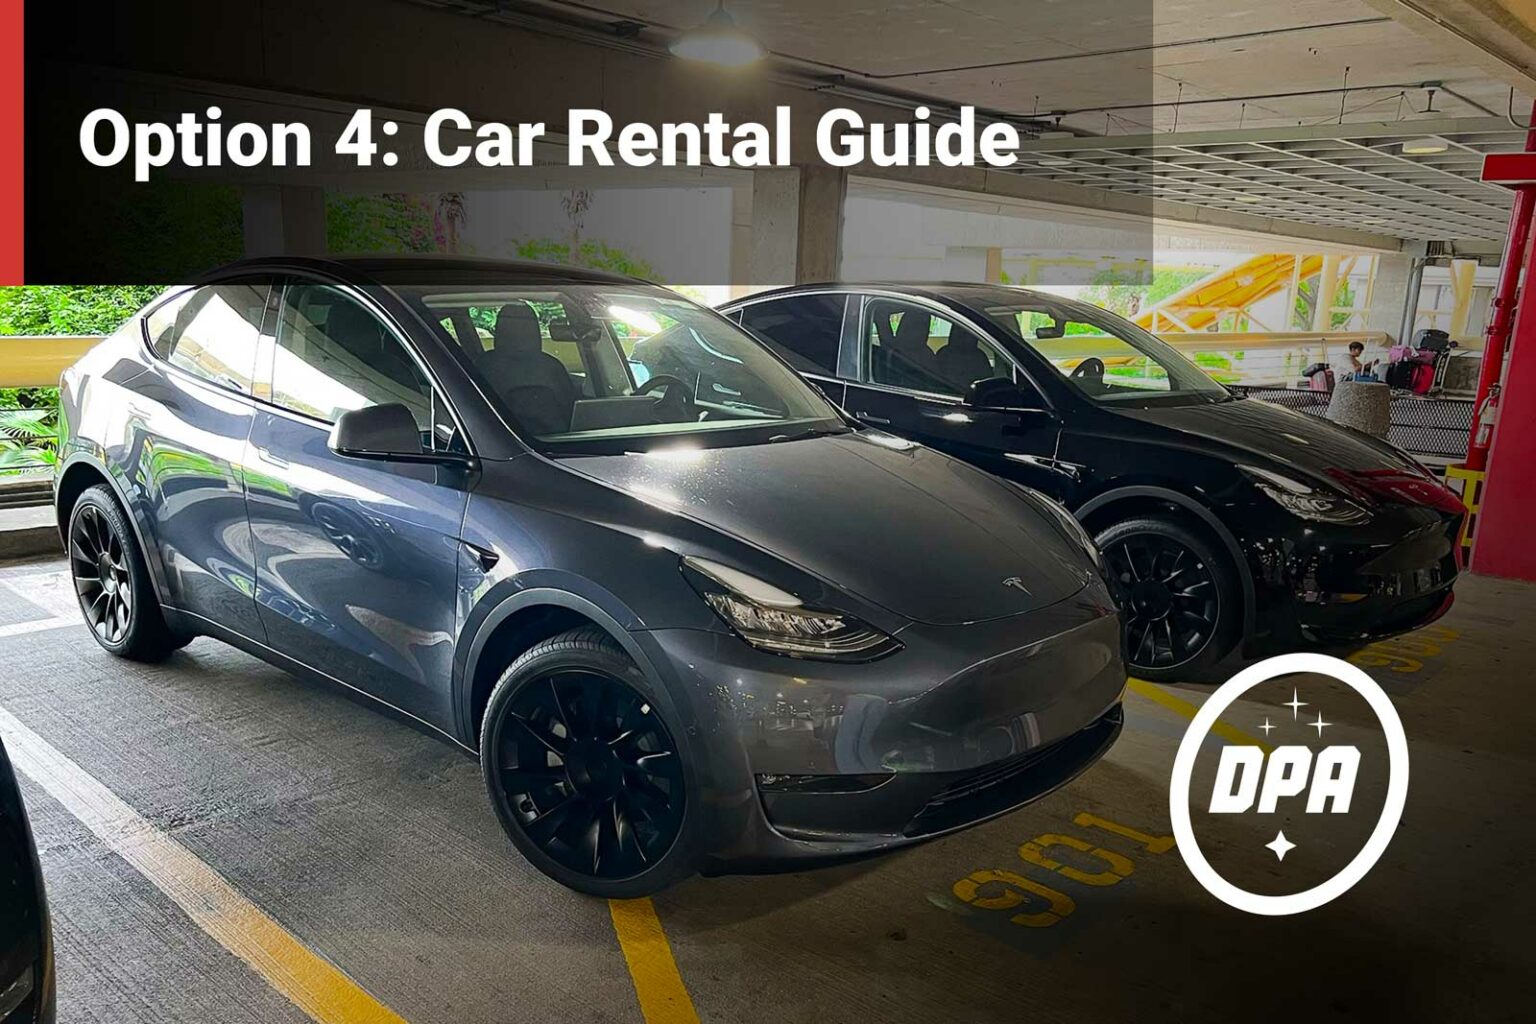 Option 4: Car Rental Guide